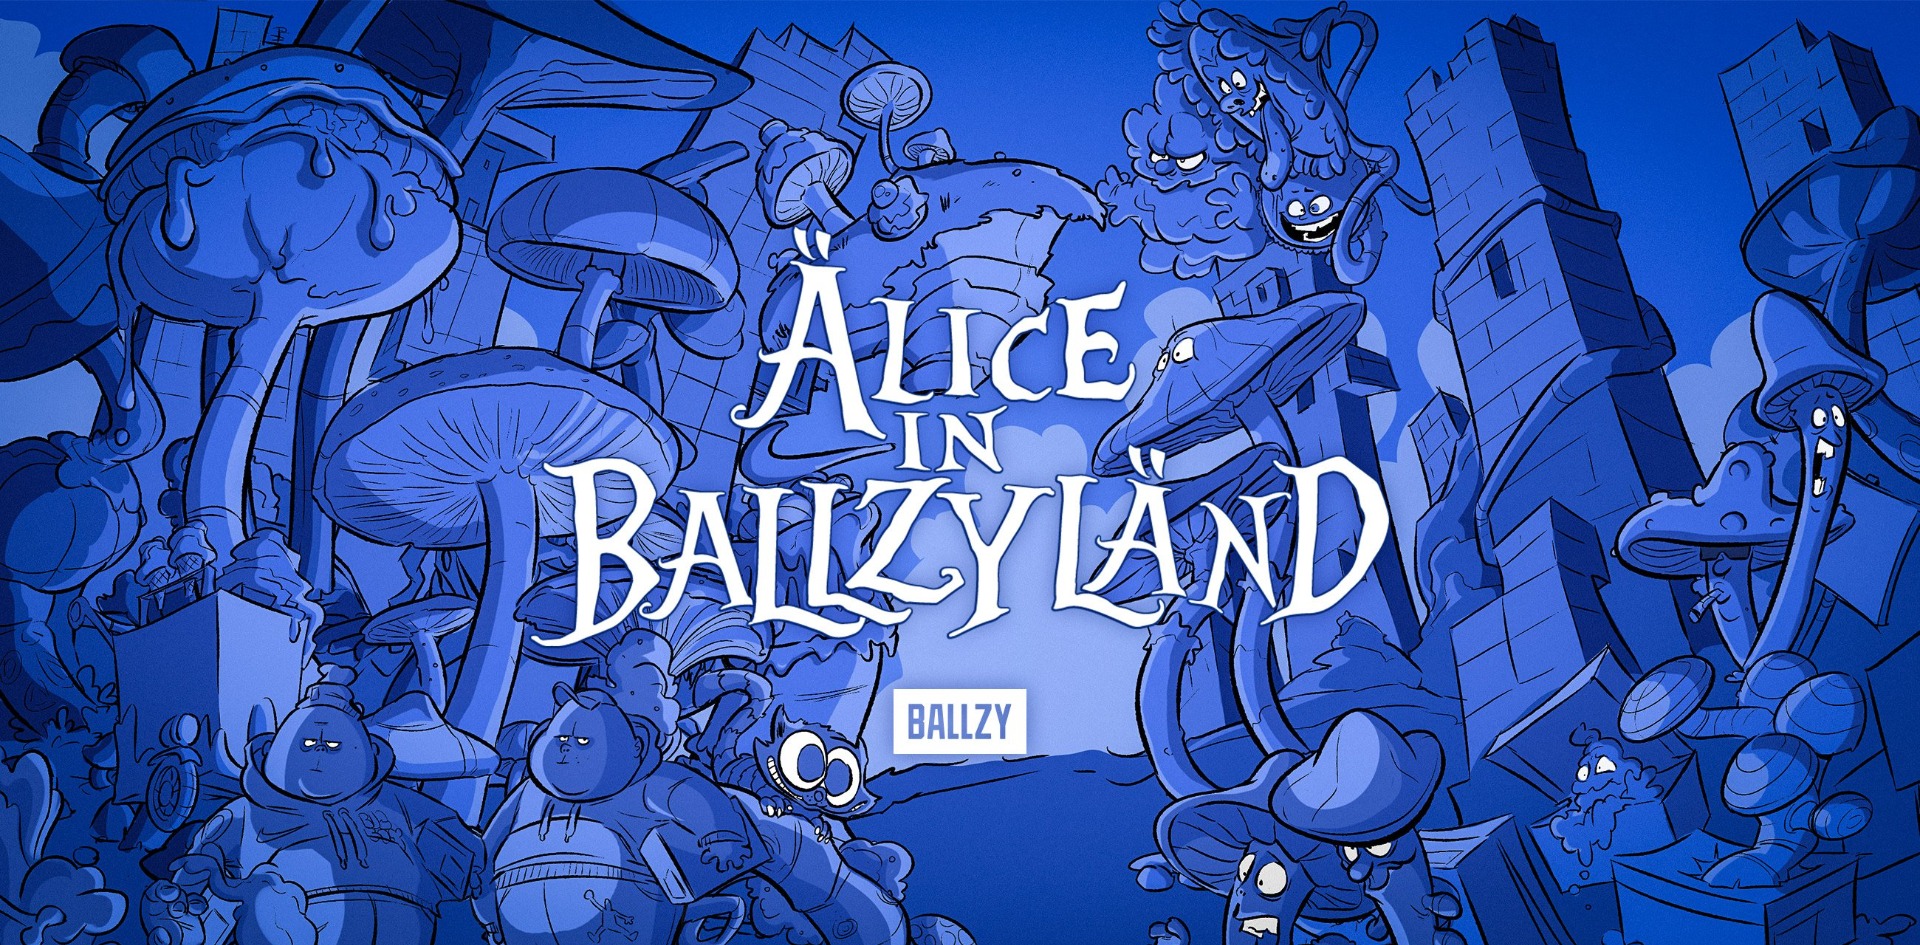 Alice in Ballzyland | Ballzy